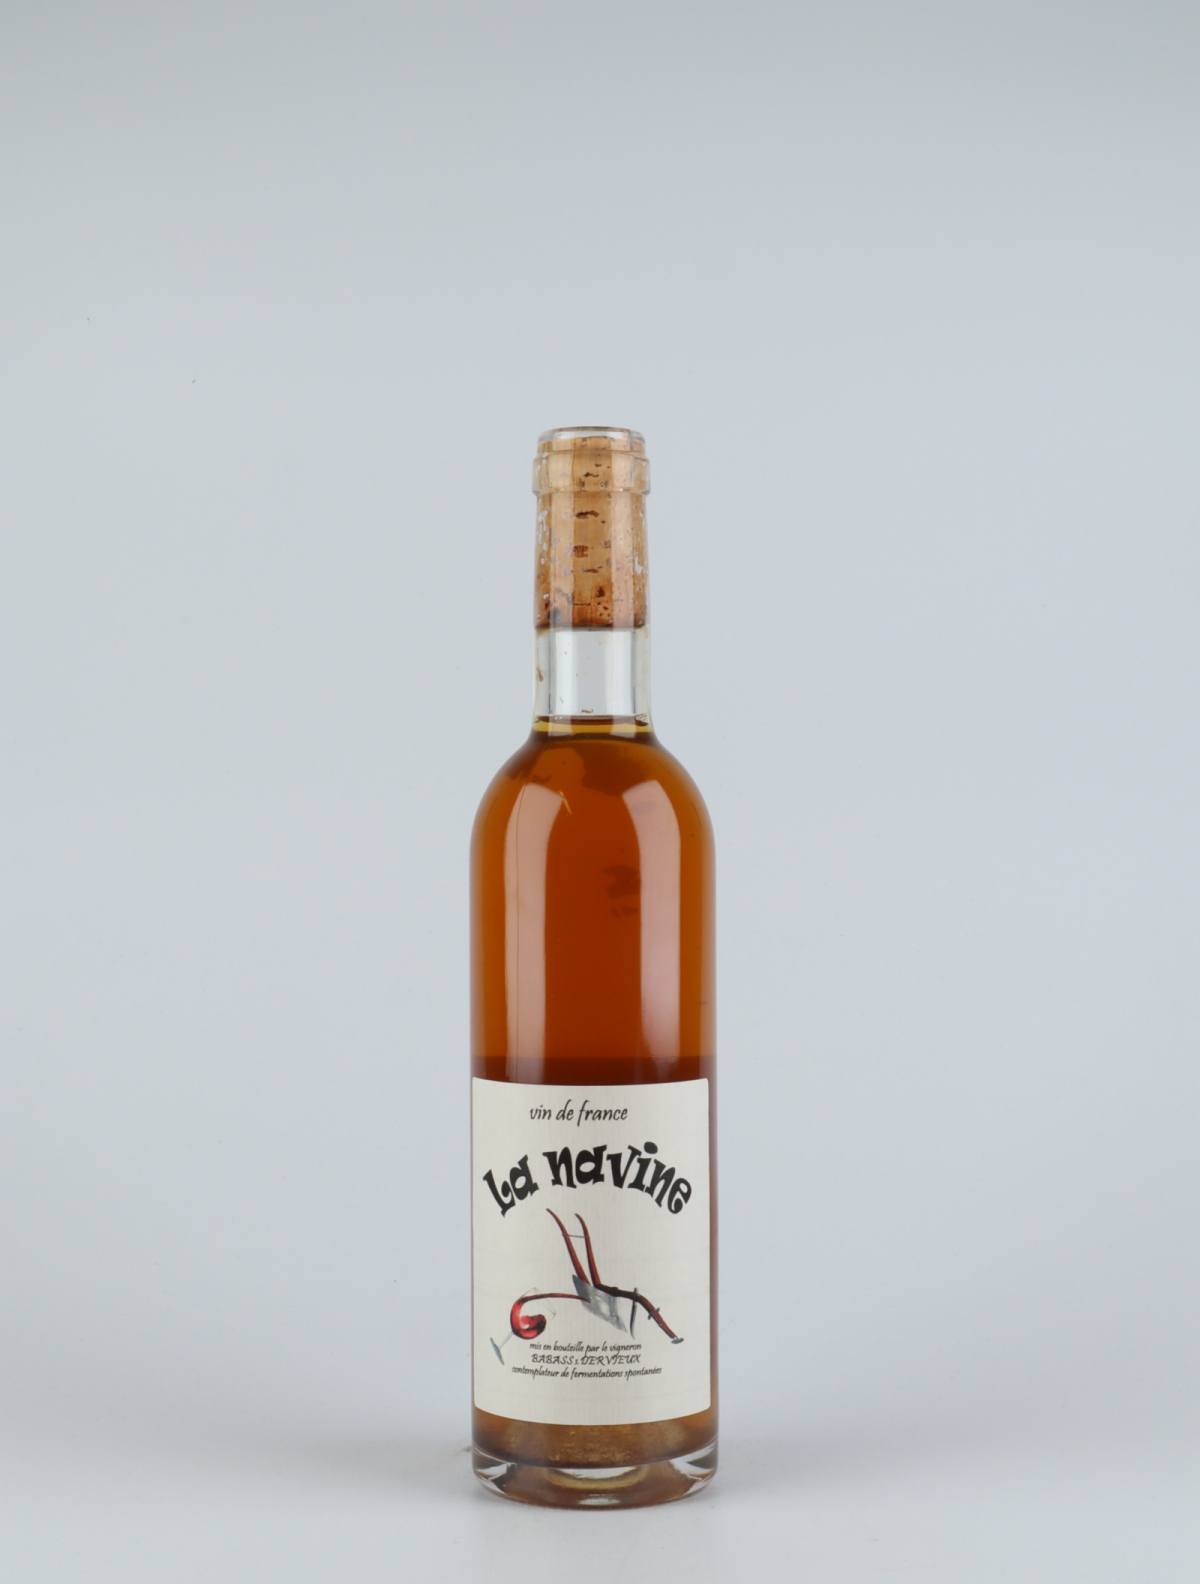 A bottle 2011 Navine White wine from Les Vignes de Babass, Loire in France